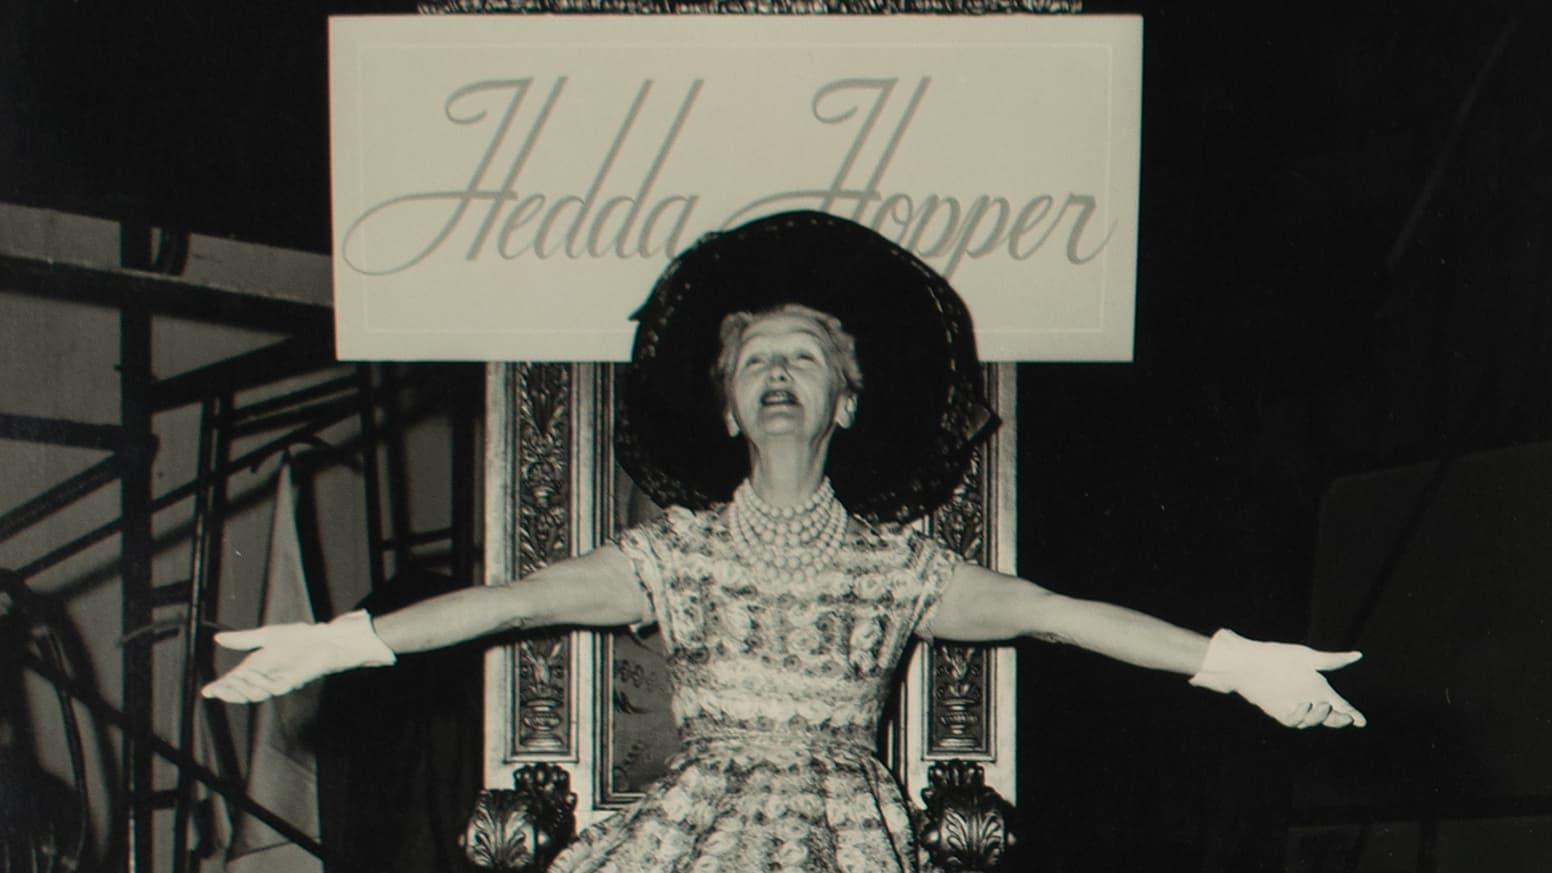 Hedda Hopper's Hollywood backdrop